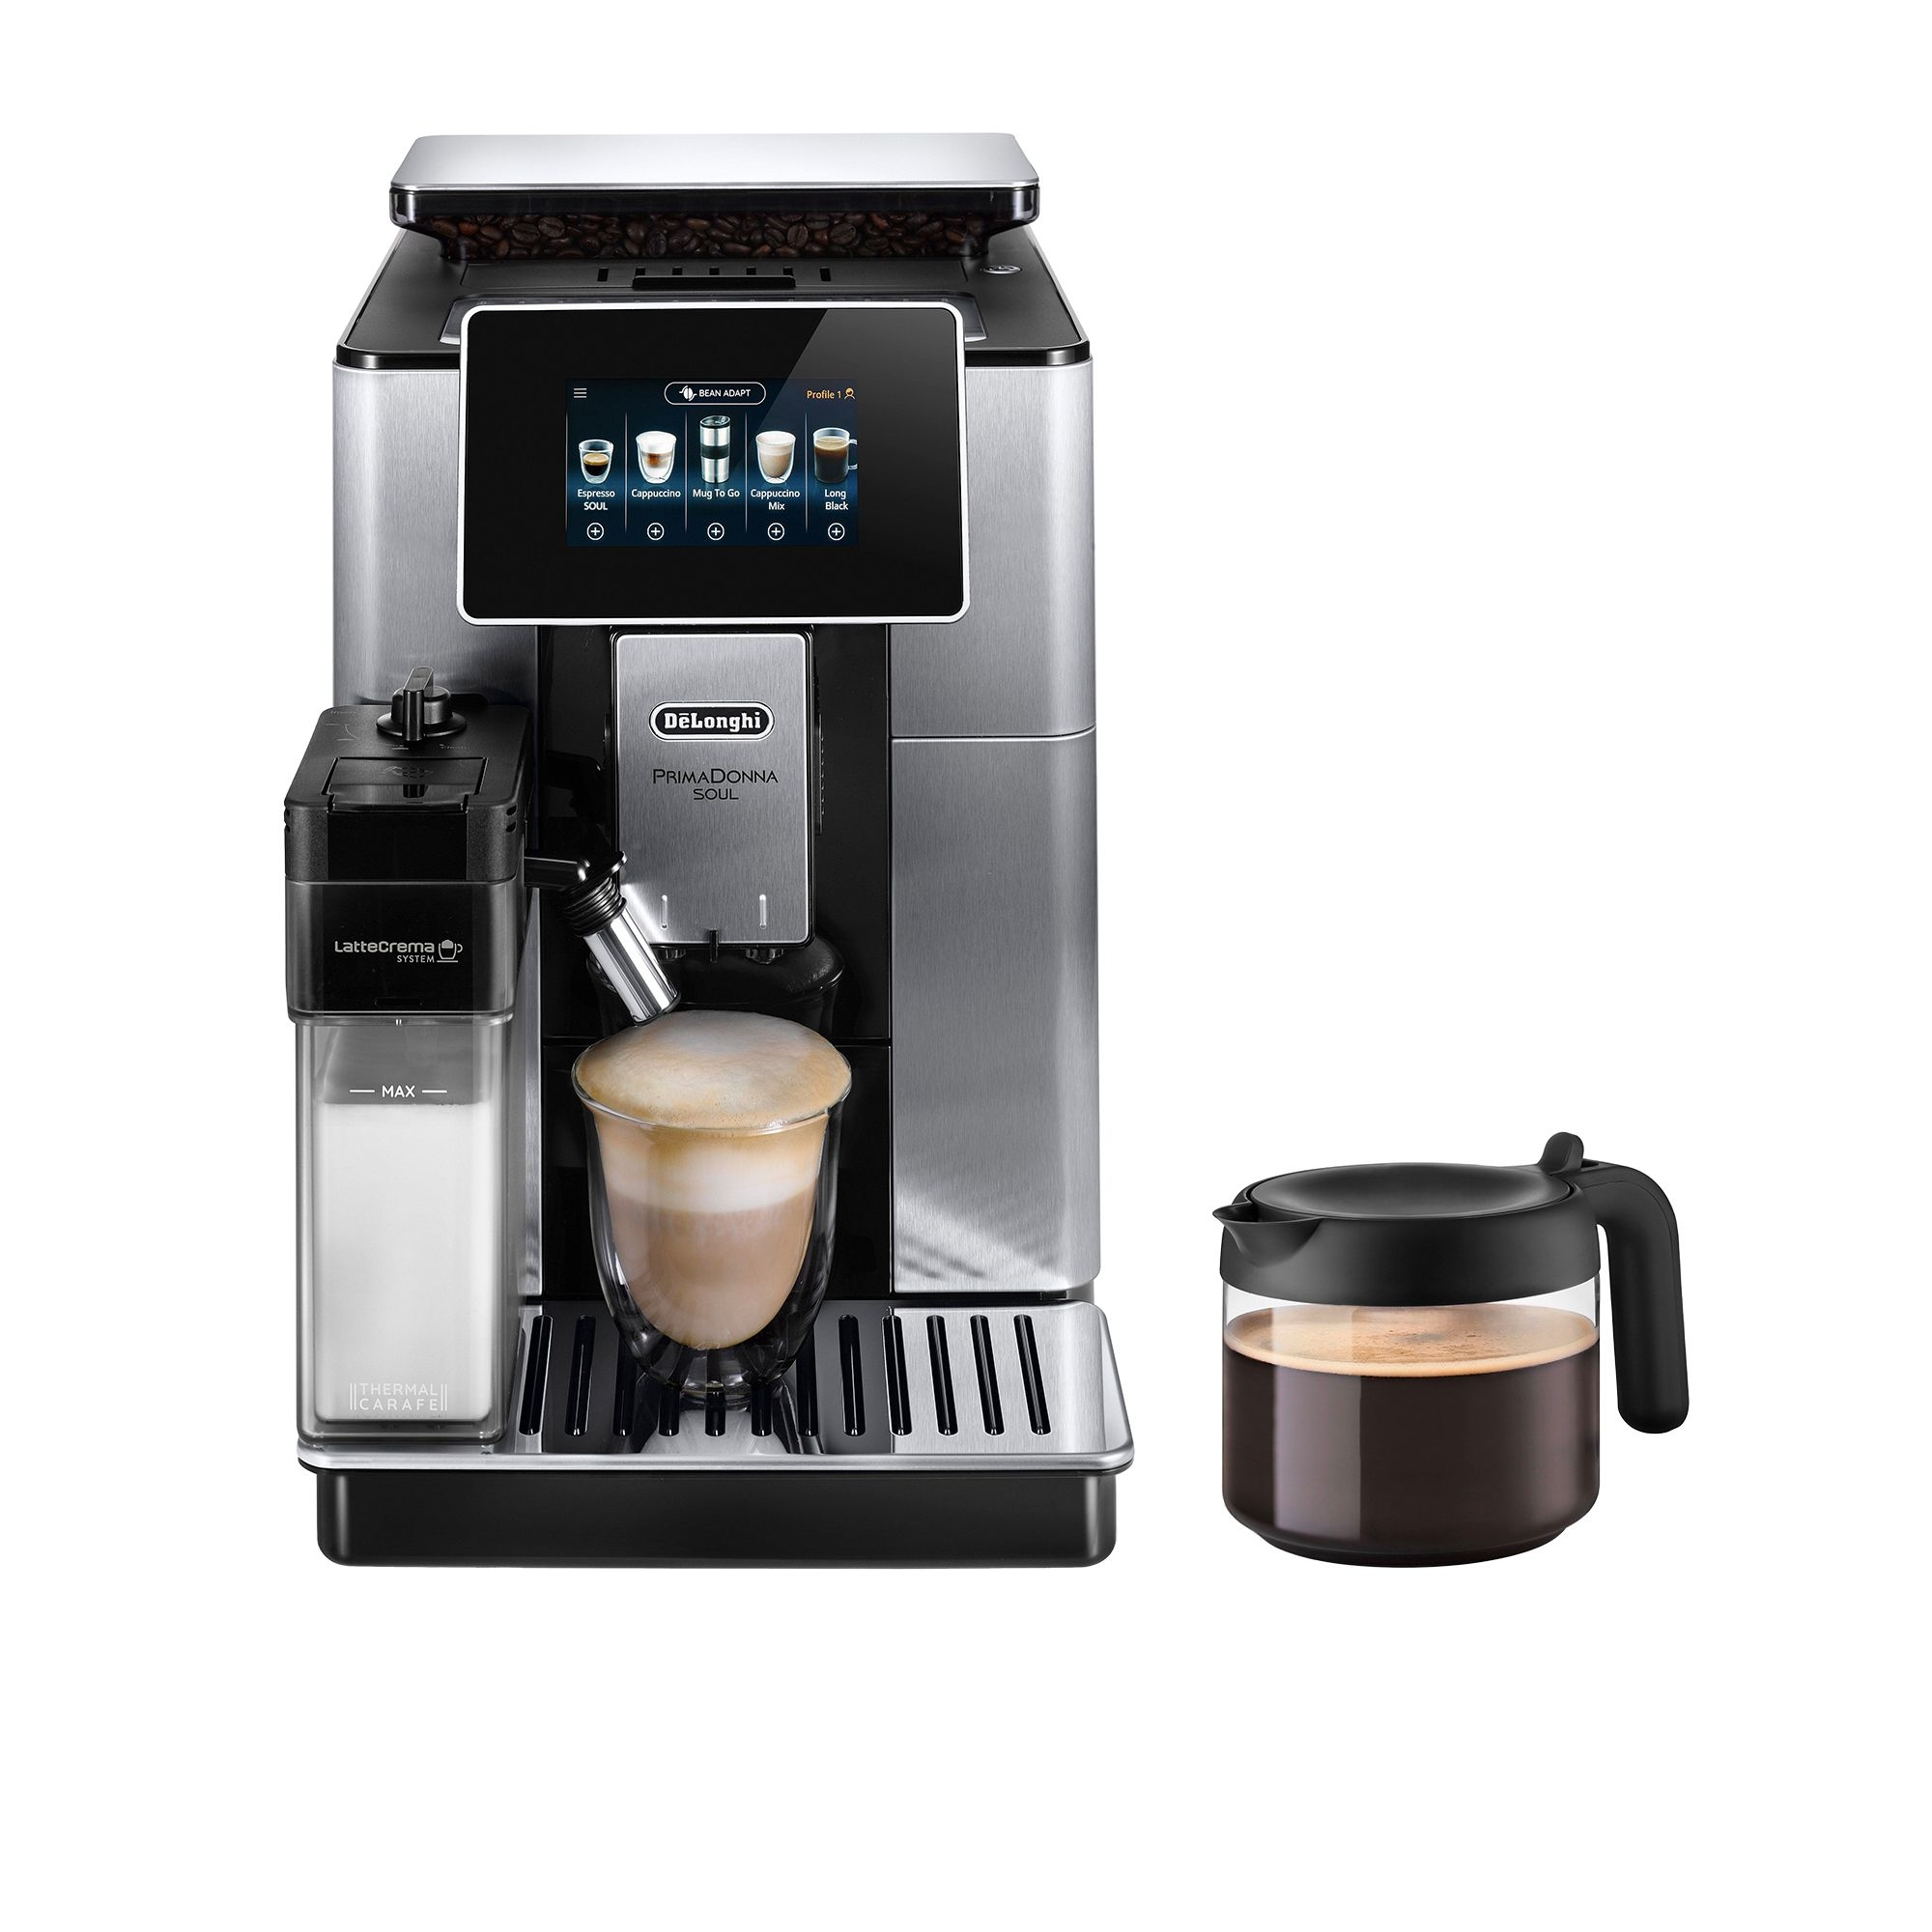 DeLonghi PrimaDonna Soul ECAM61075MB Fully Automatic Coffee Machine Black Image 1